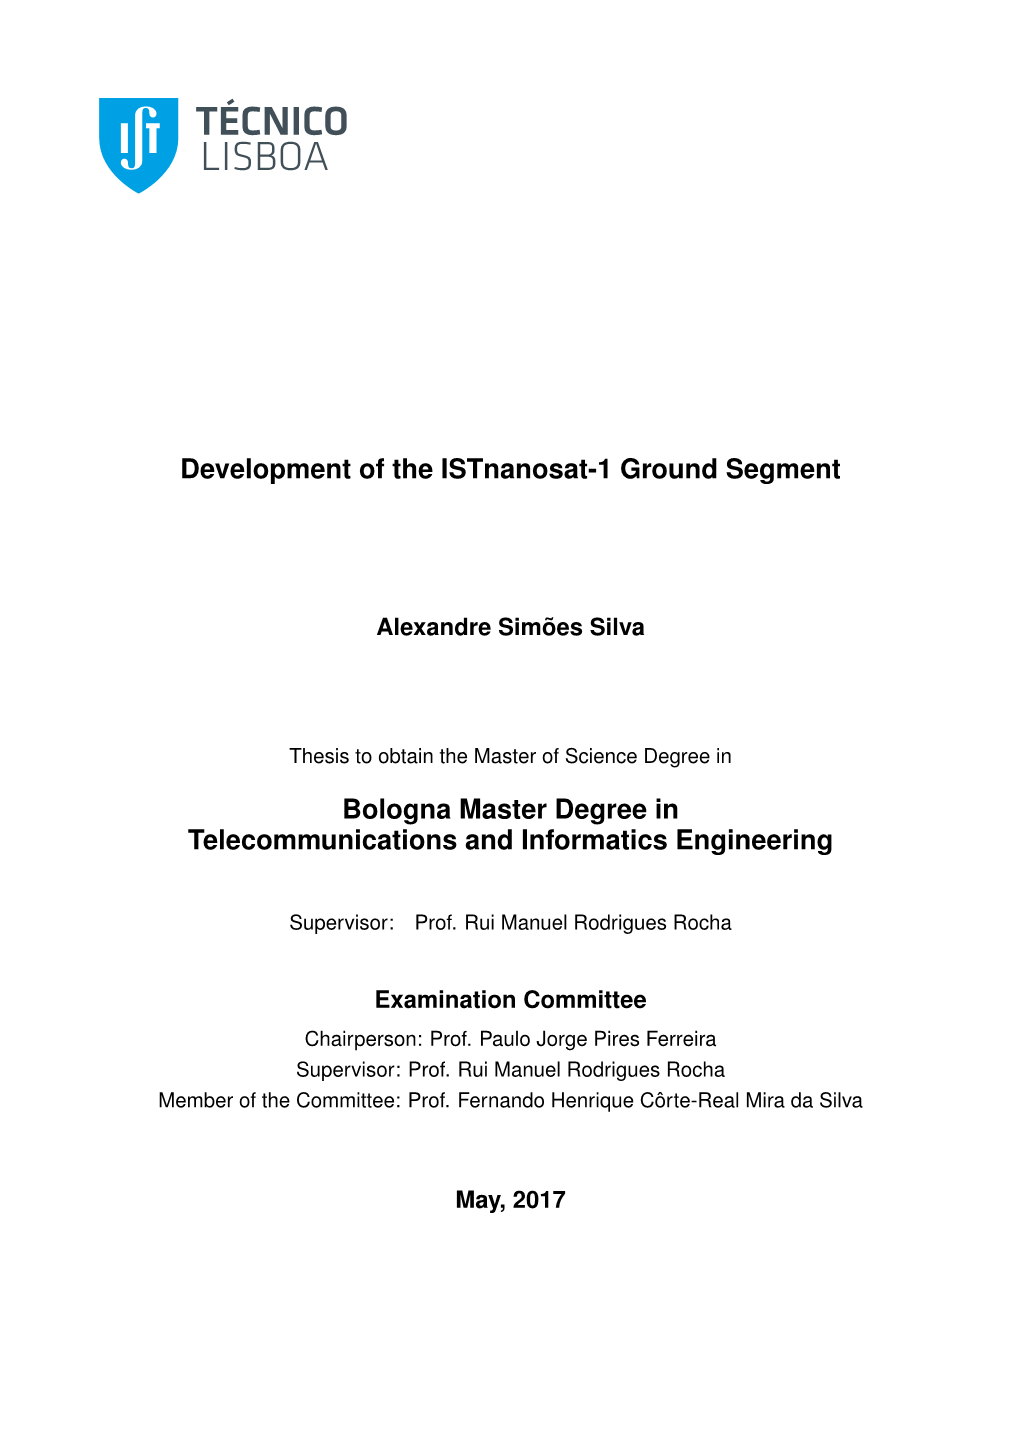 Development of the Istnanosat-1 Ground Segment